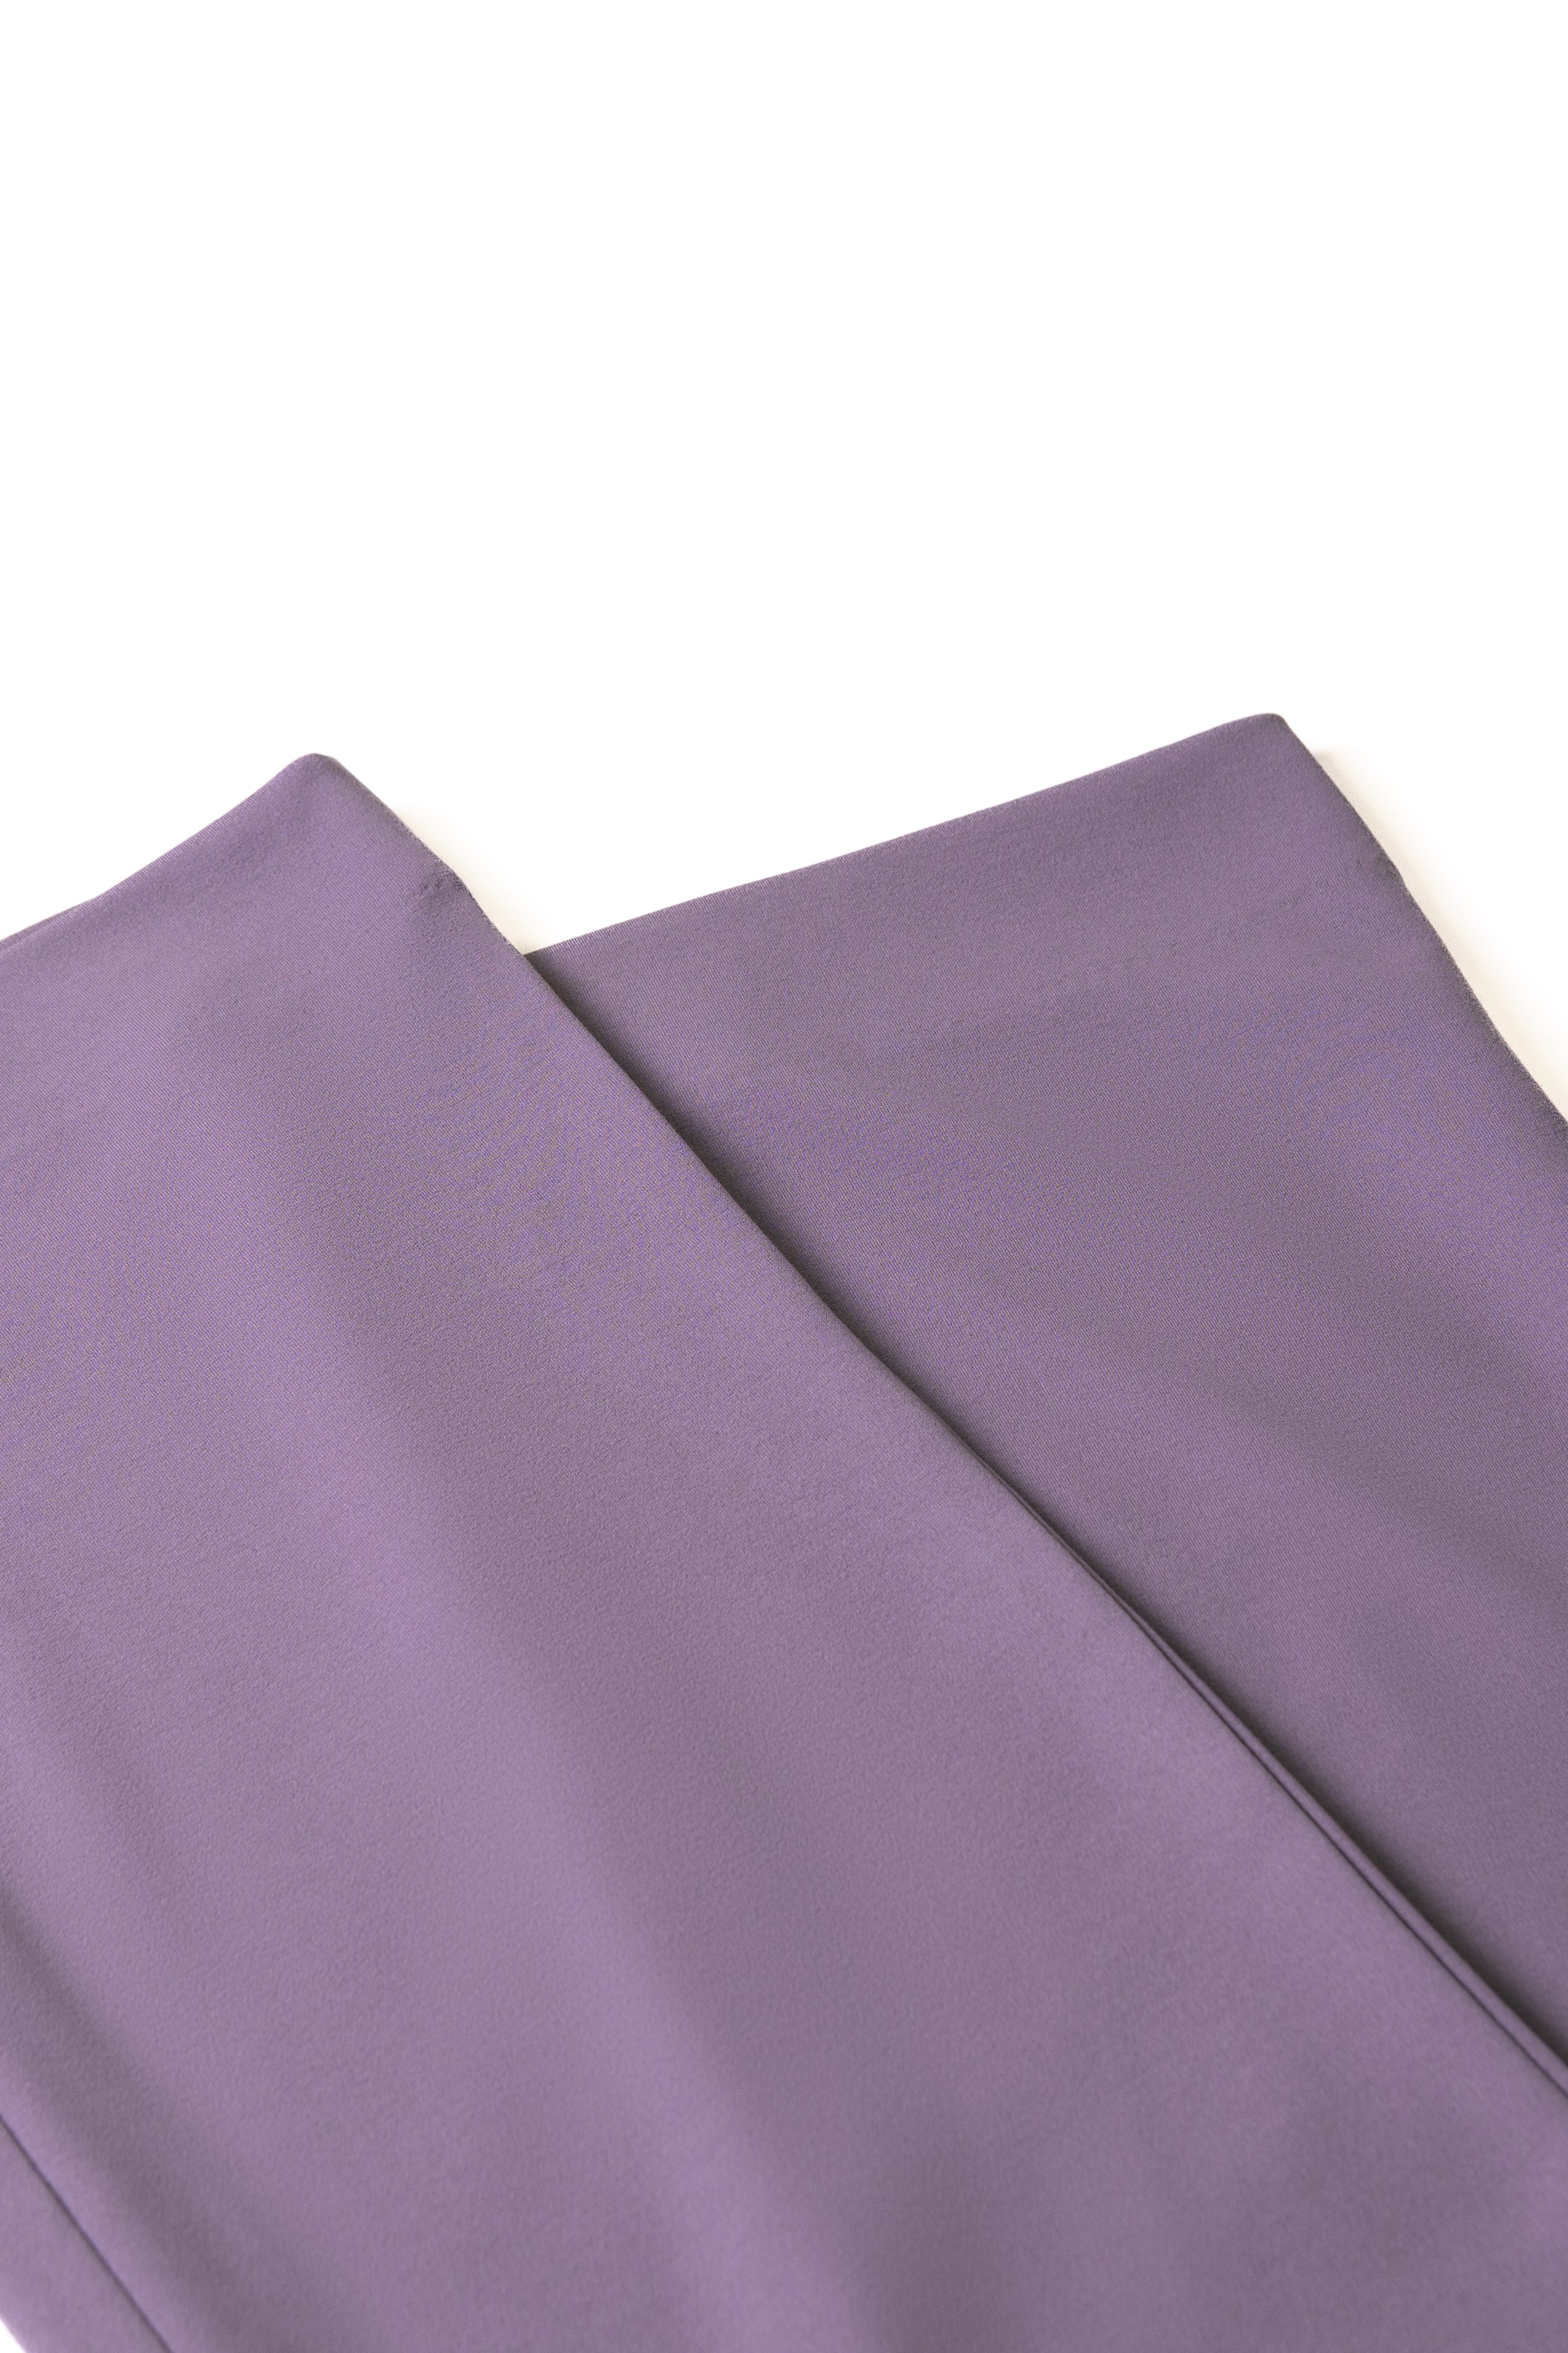 Lilac Power Stretch Pants